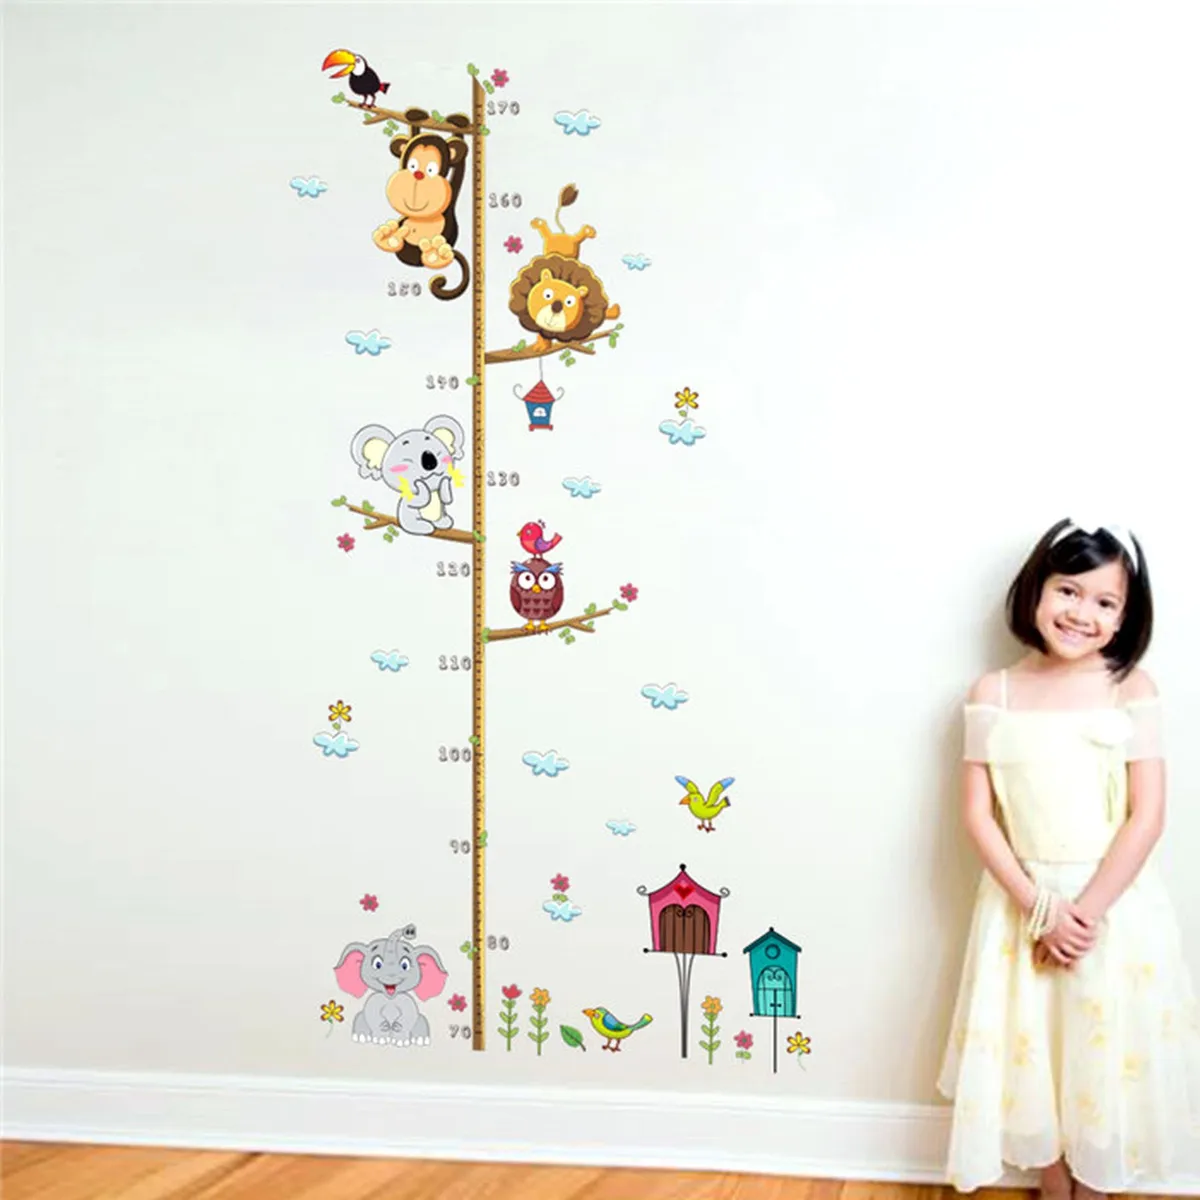 Meßlatte Kinder Kinderzimmer Wandtattoo Wandsticker Messlatte Größe | eBay messen